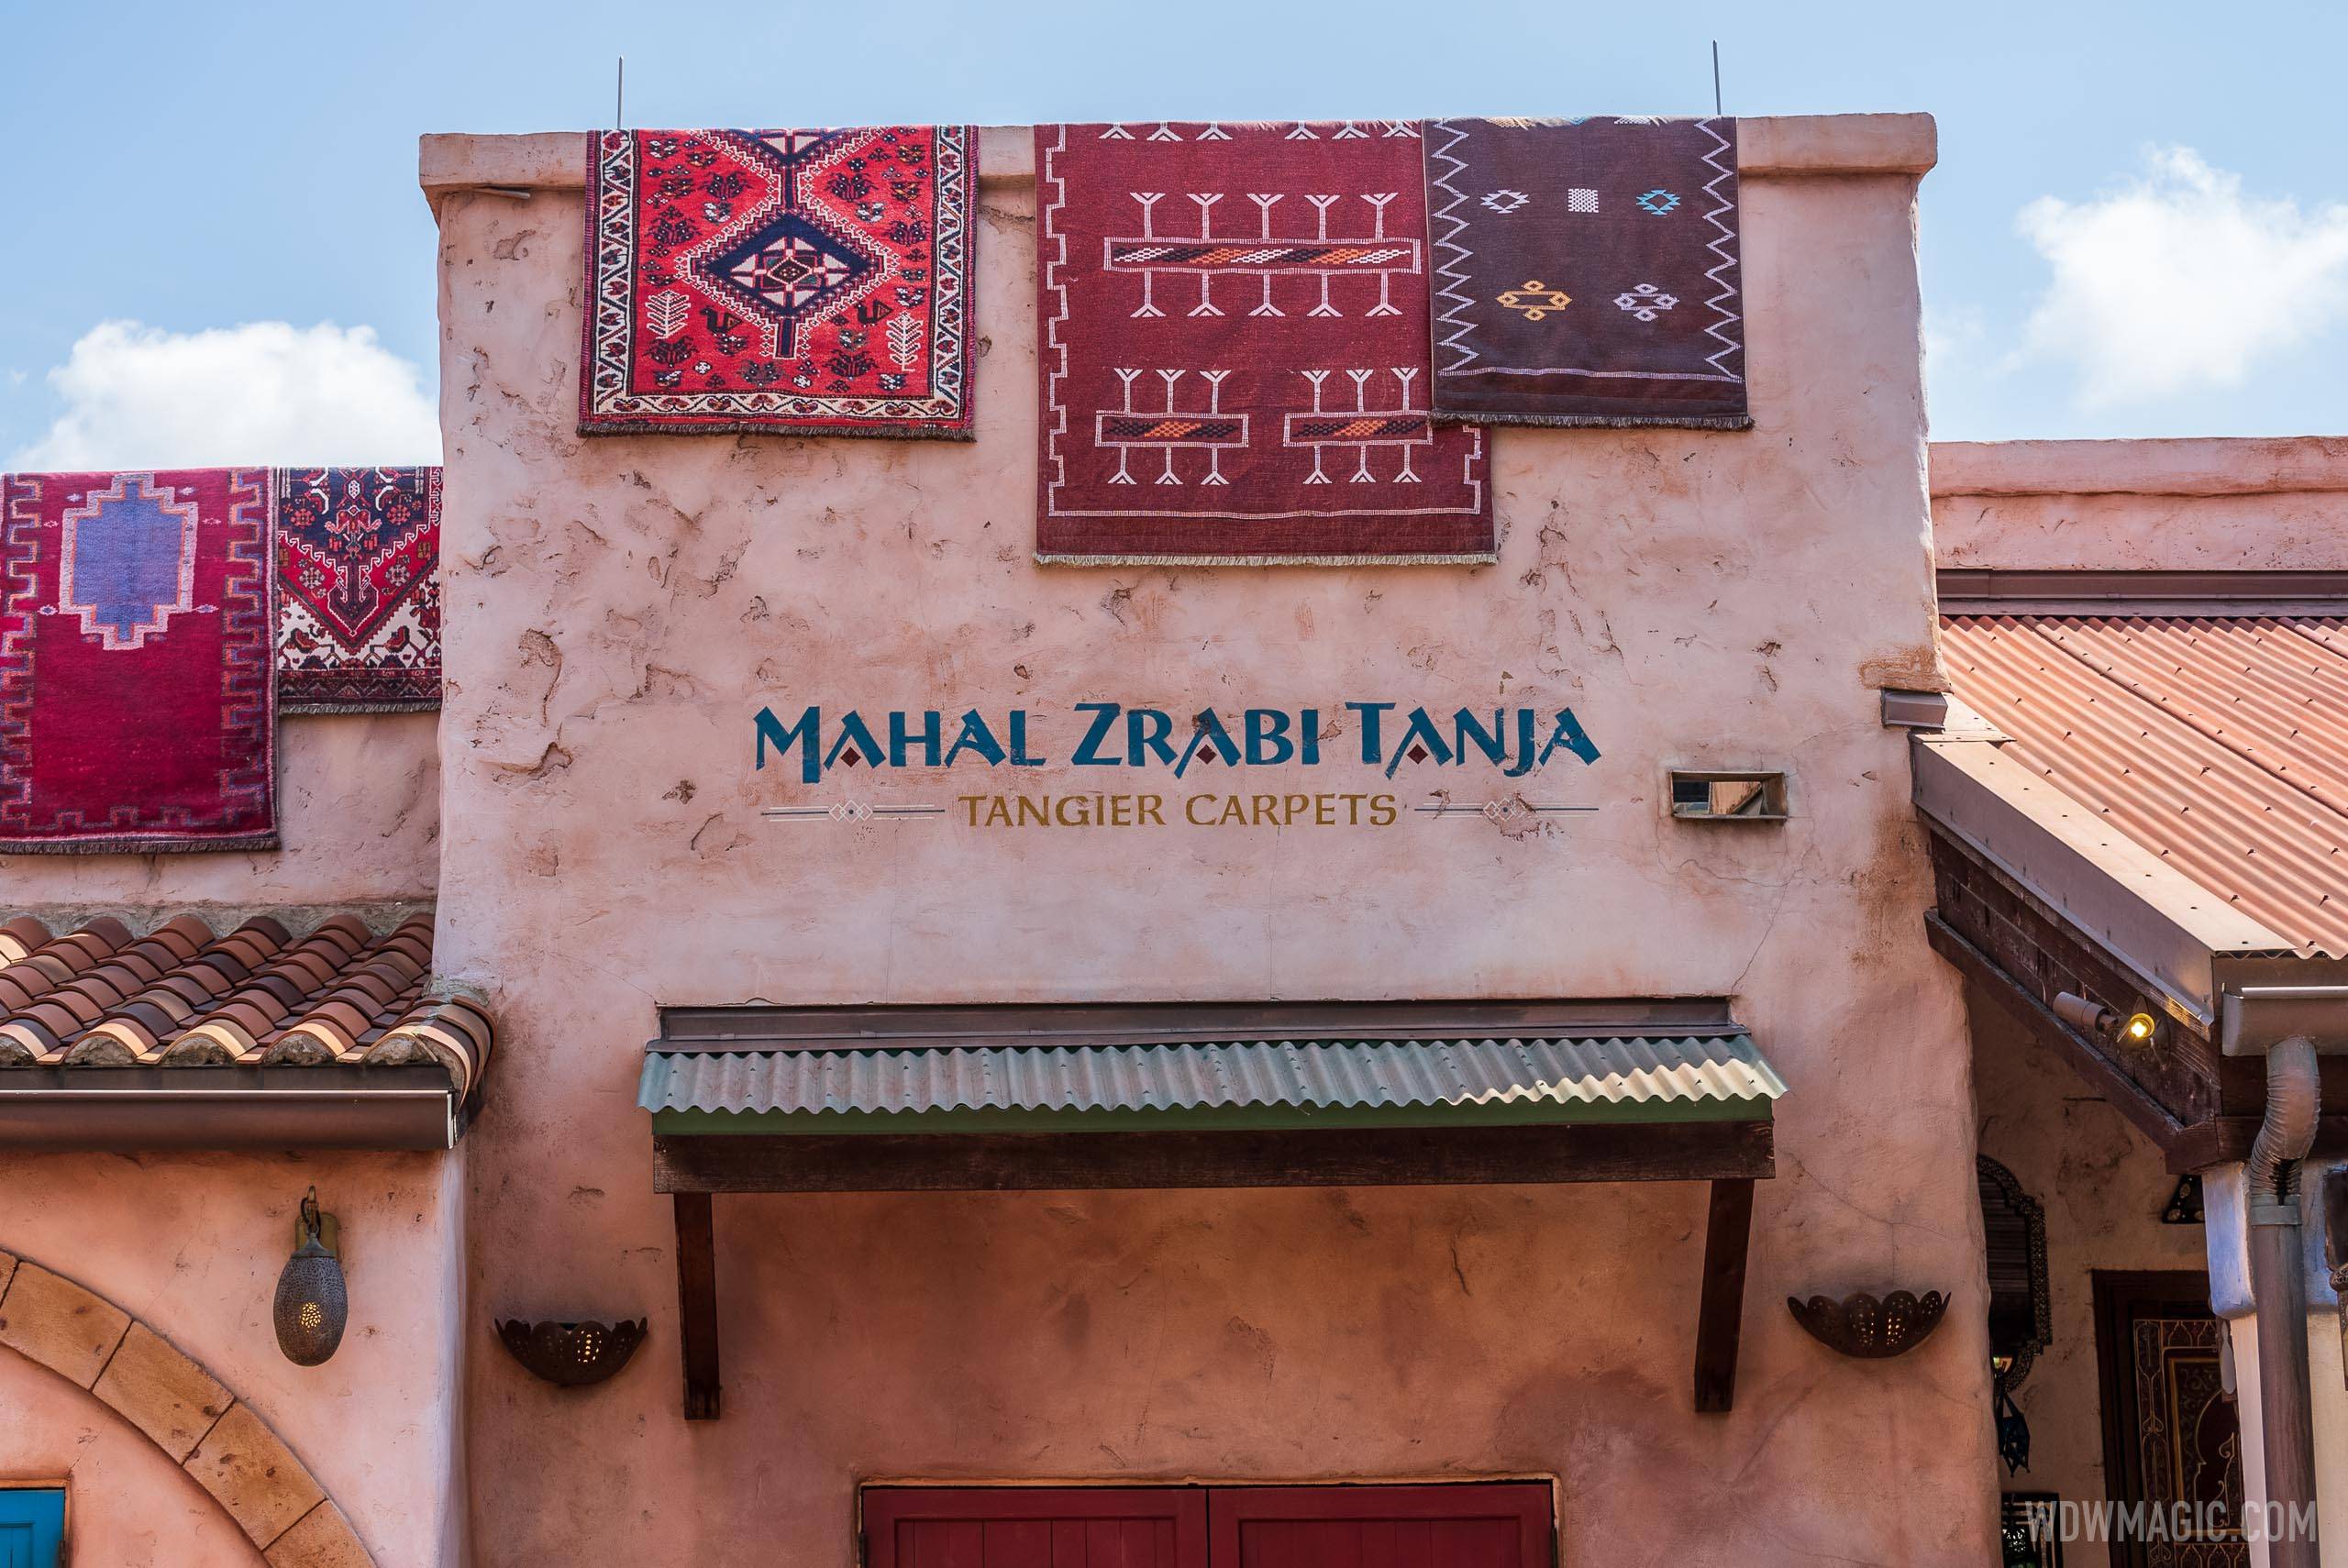 Tangier Carpets signage